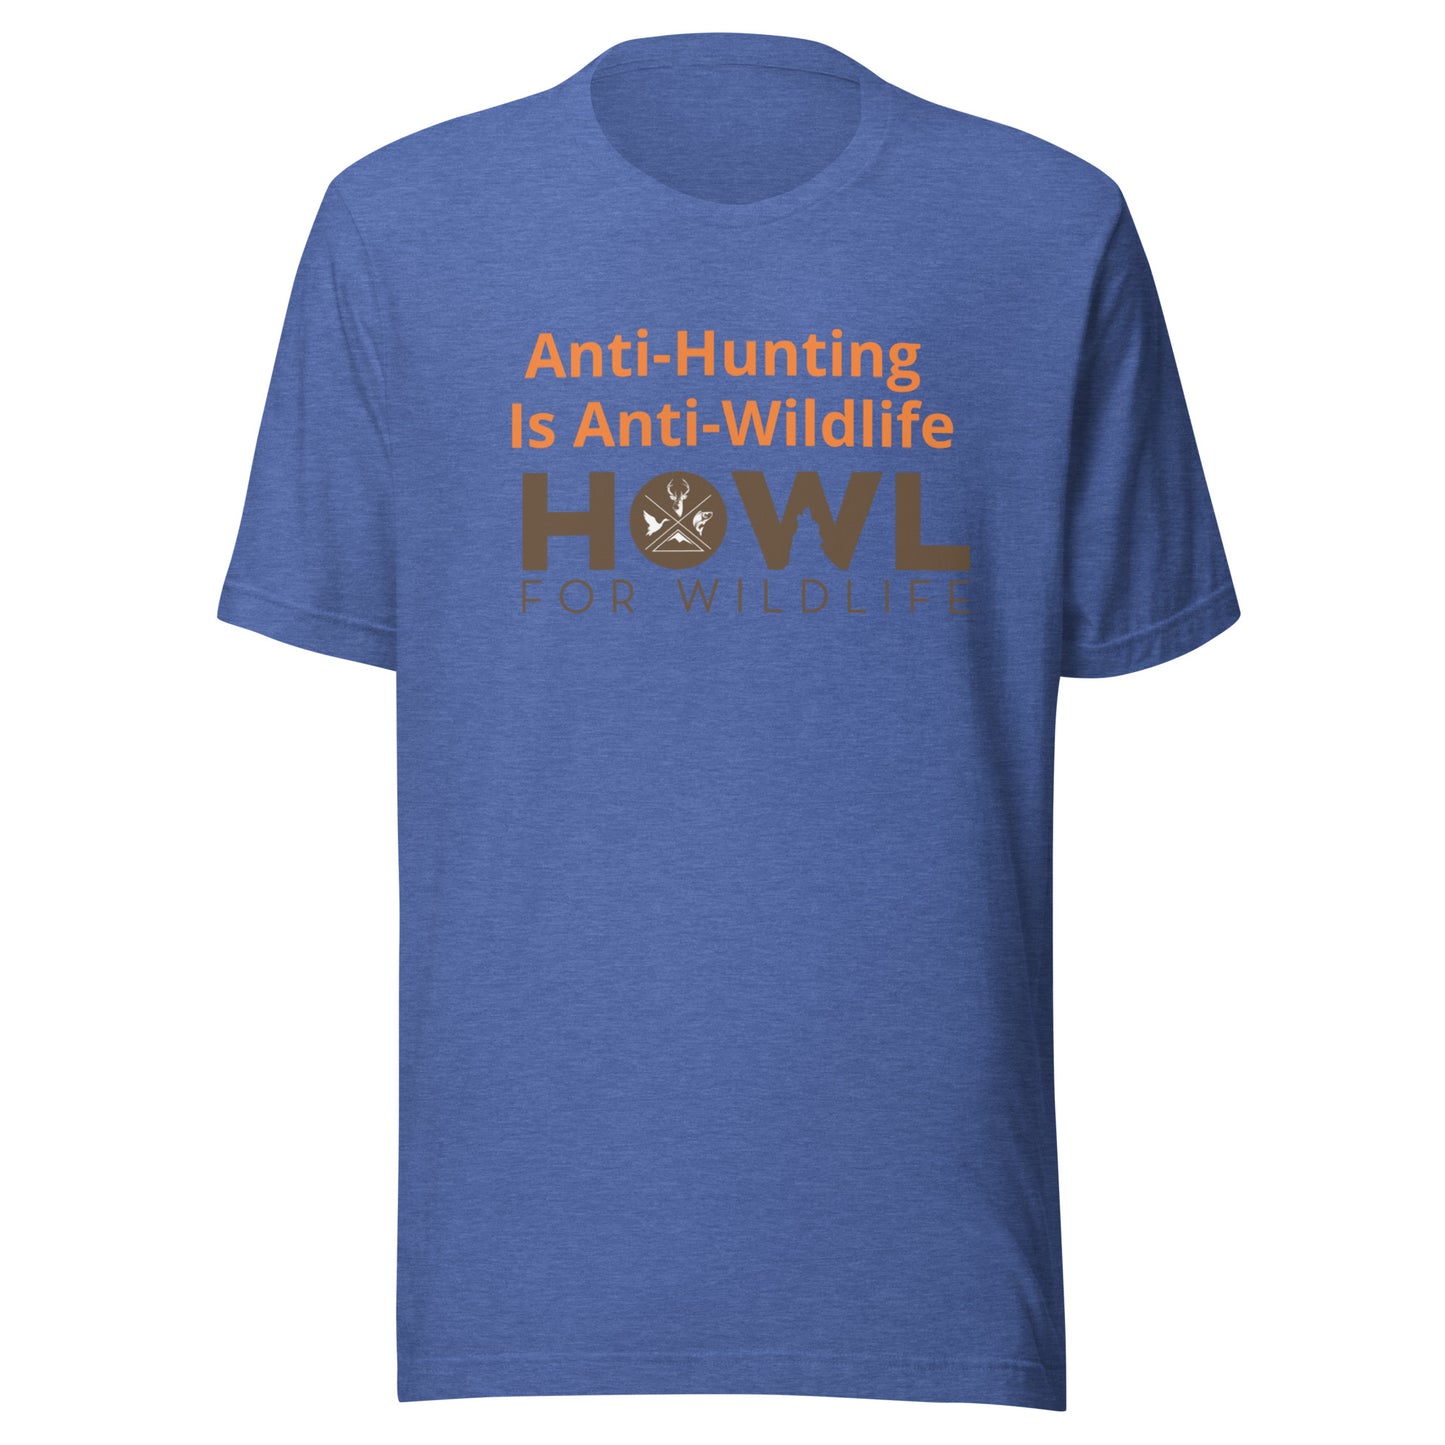 Anti-hunting is anti-wildlife - Unisex t-shirt